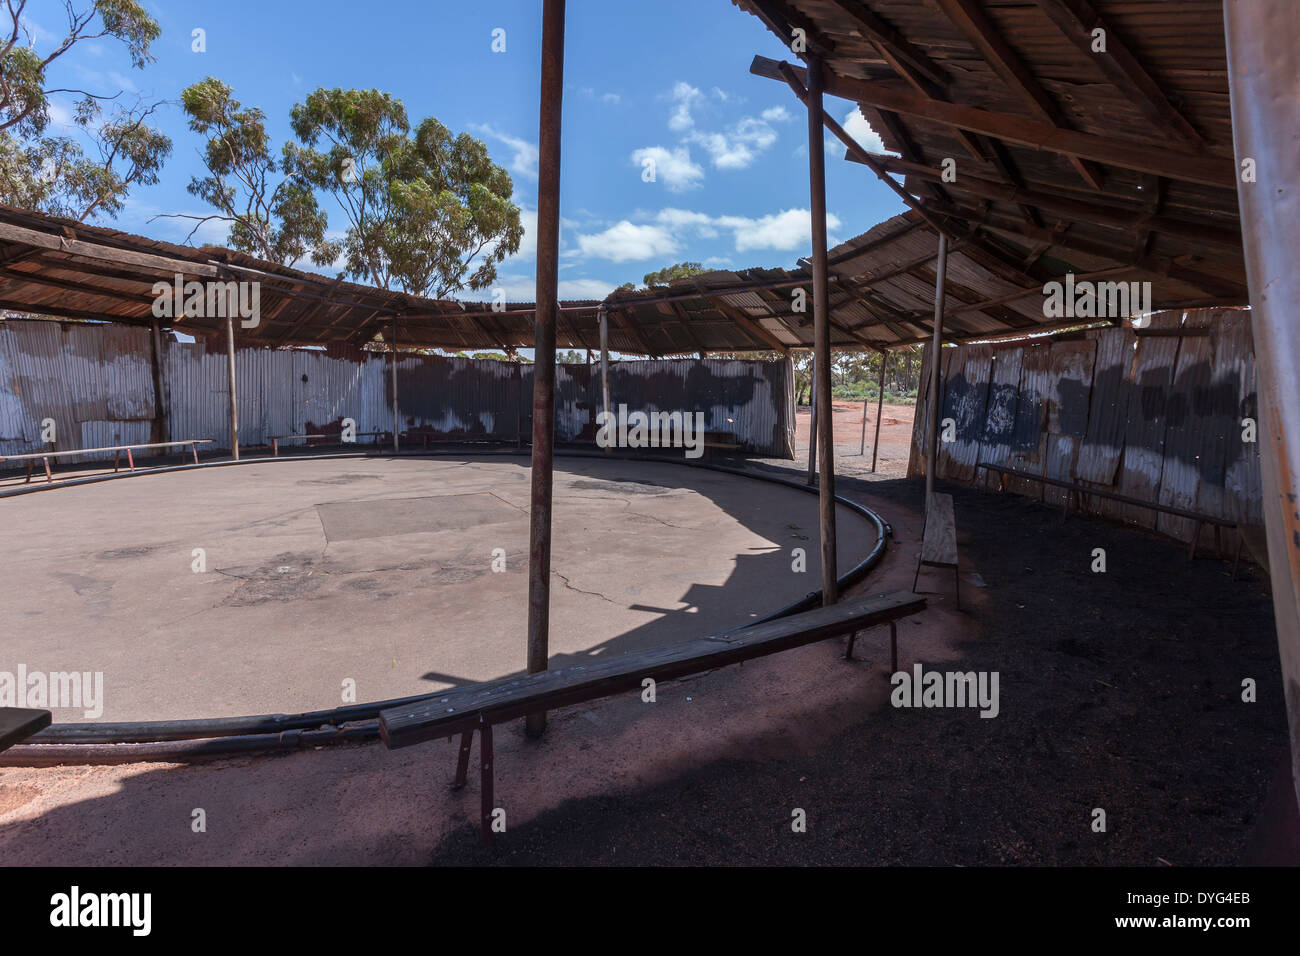 Two Up gambling Establishment in the bush, empty near Kalgoolie Western Australia. Stock Photo